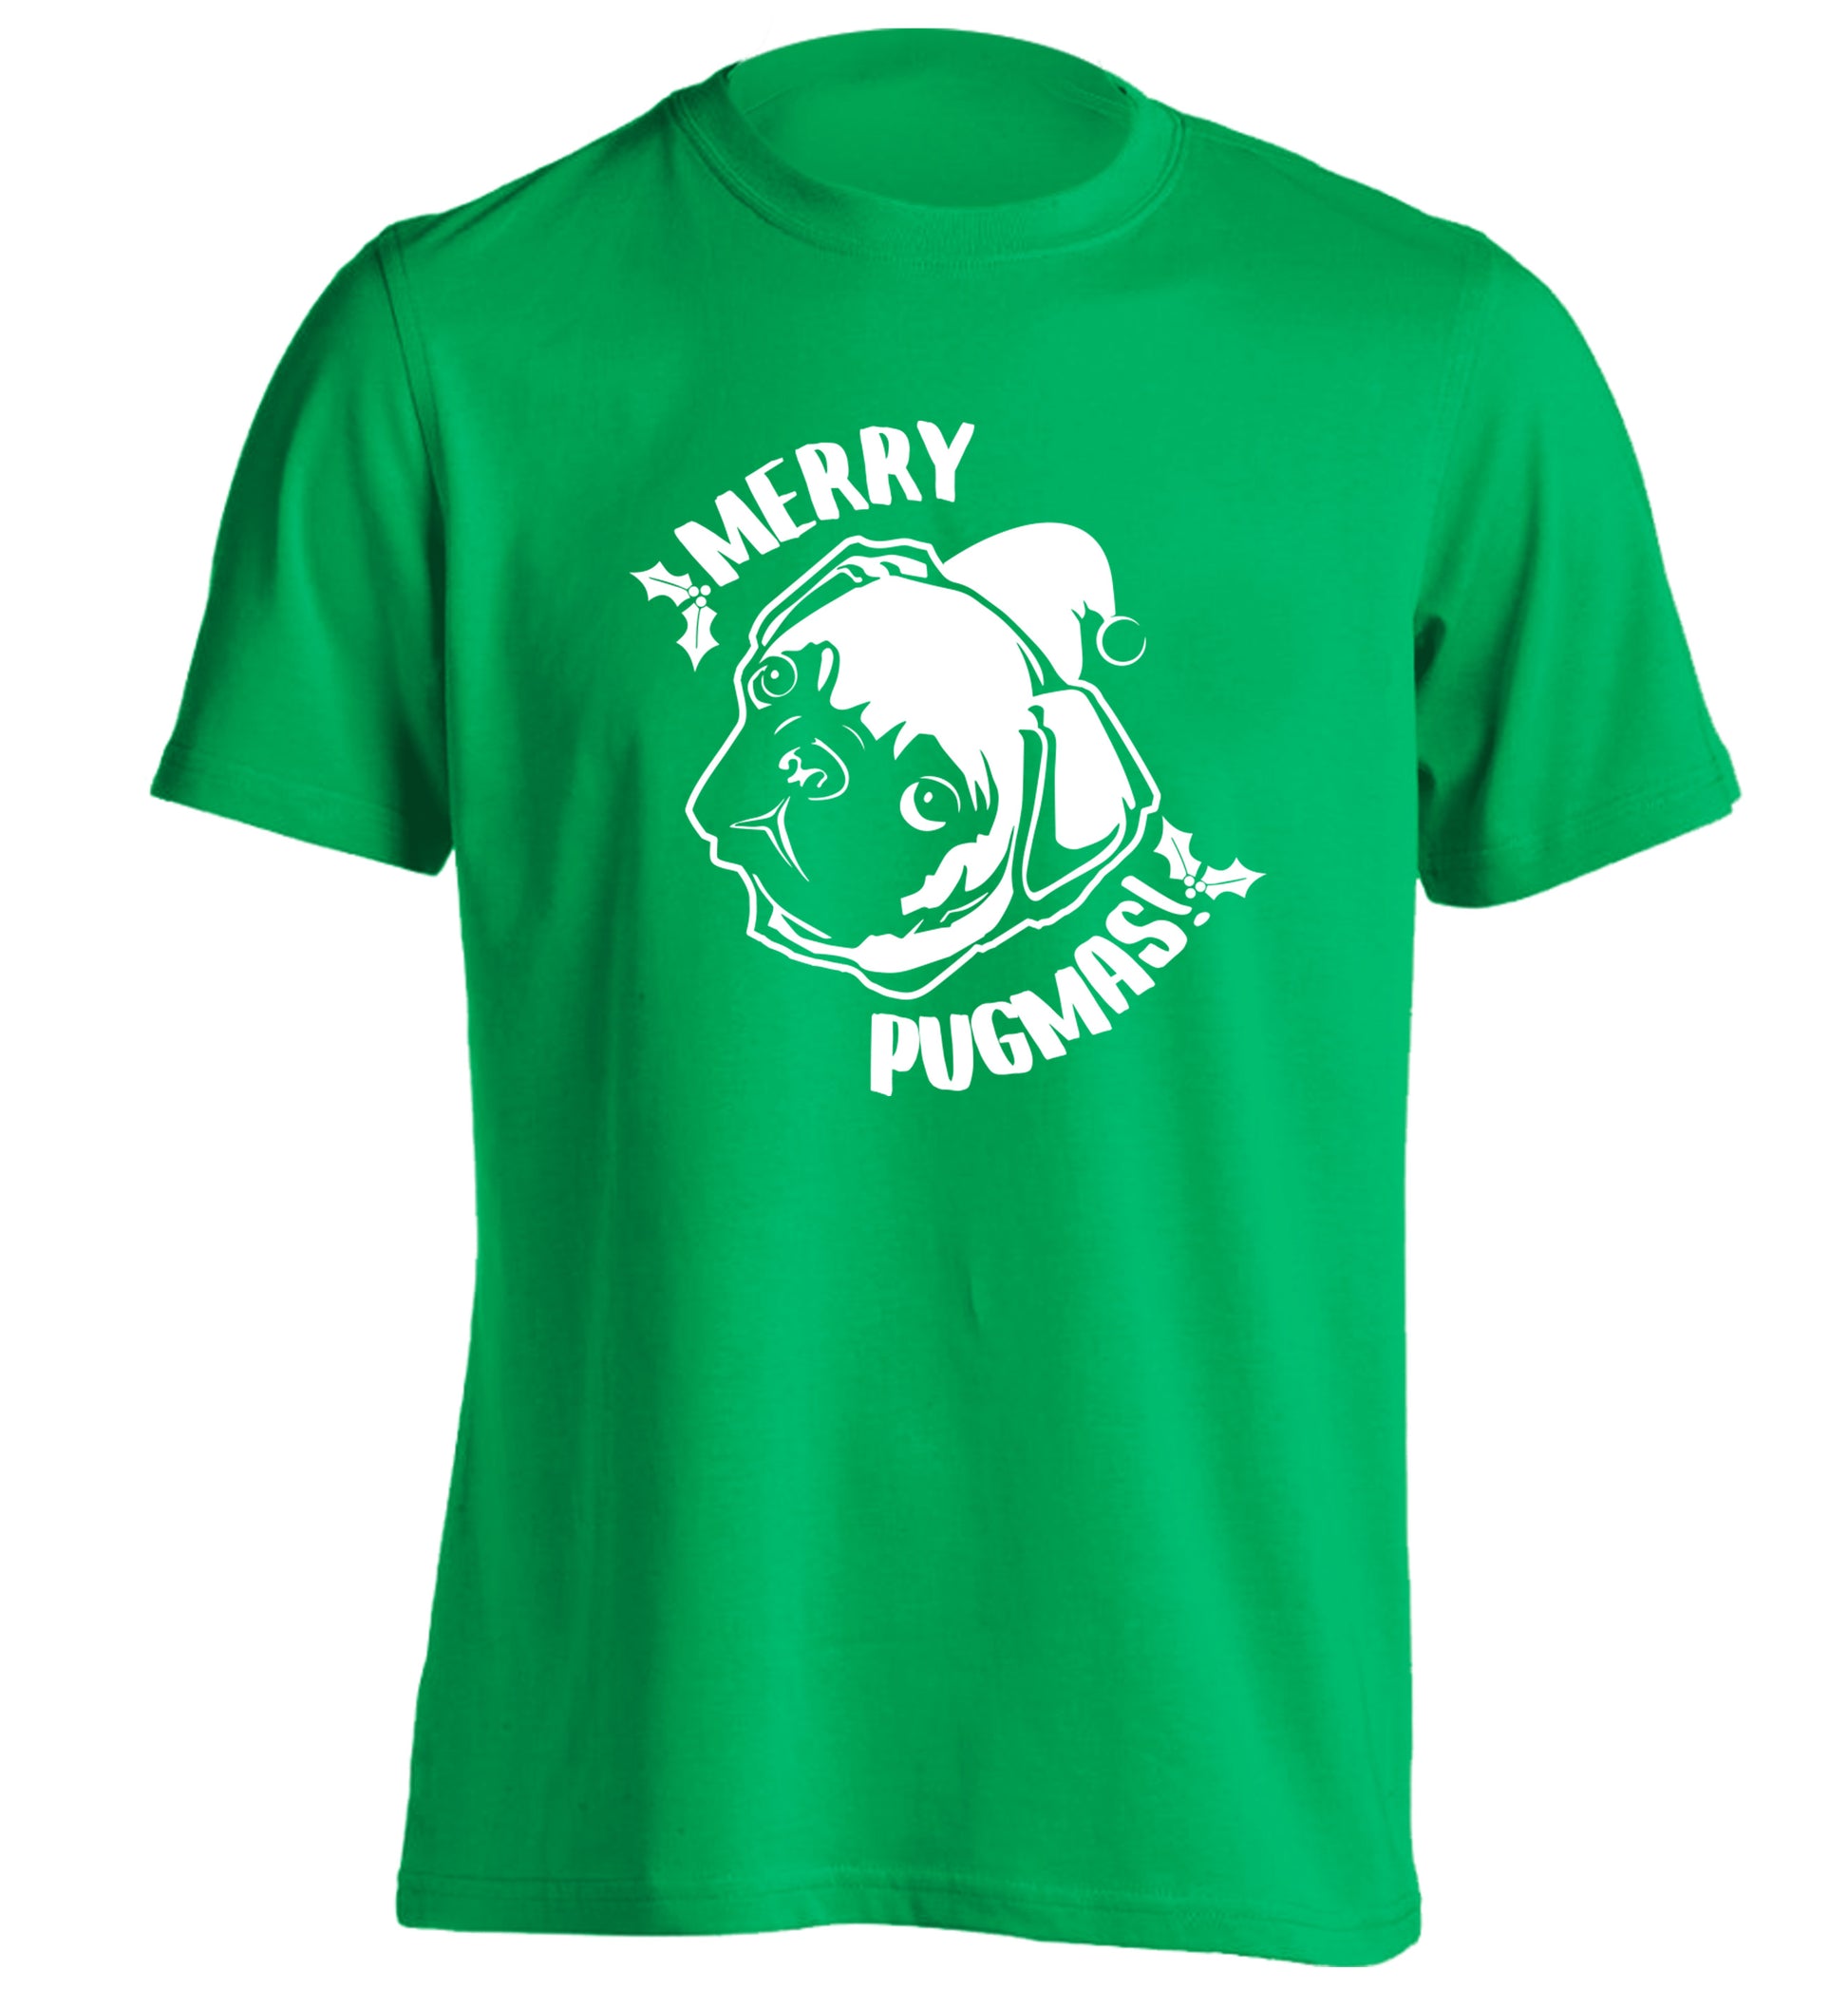 Merry Pugmas adults unisex green Tshirt 2XL